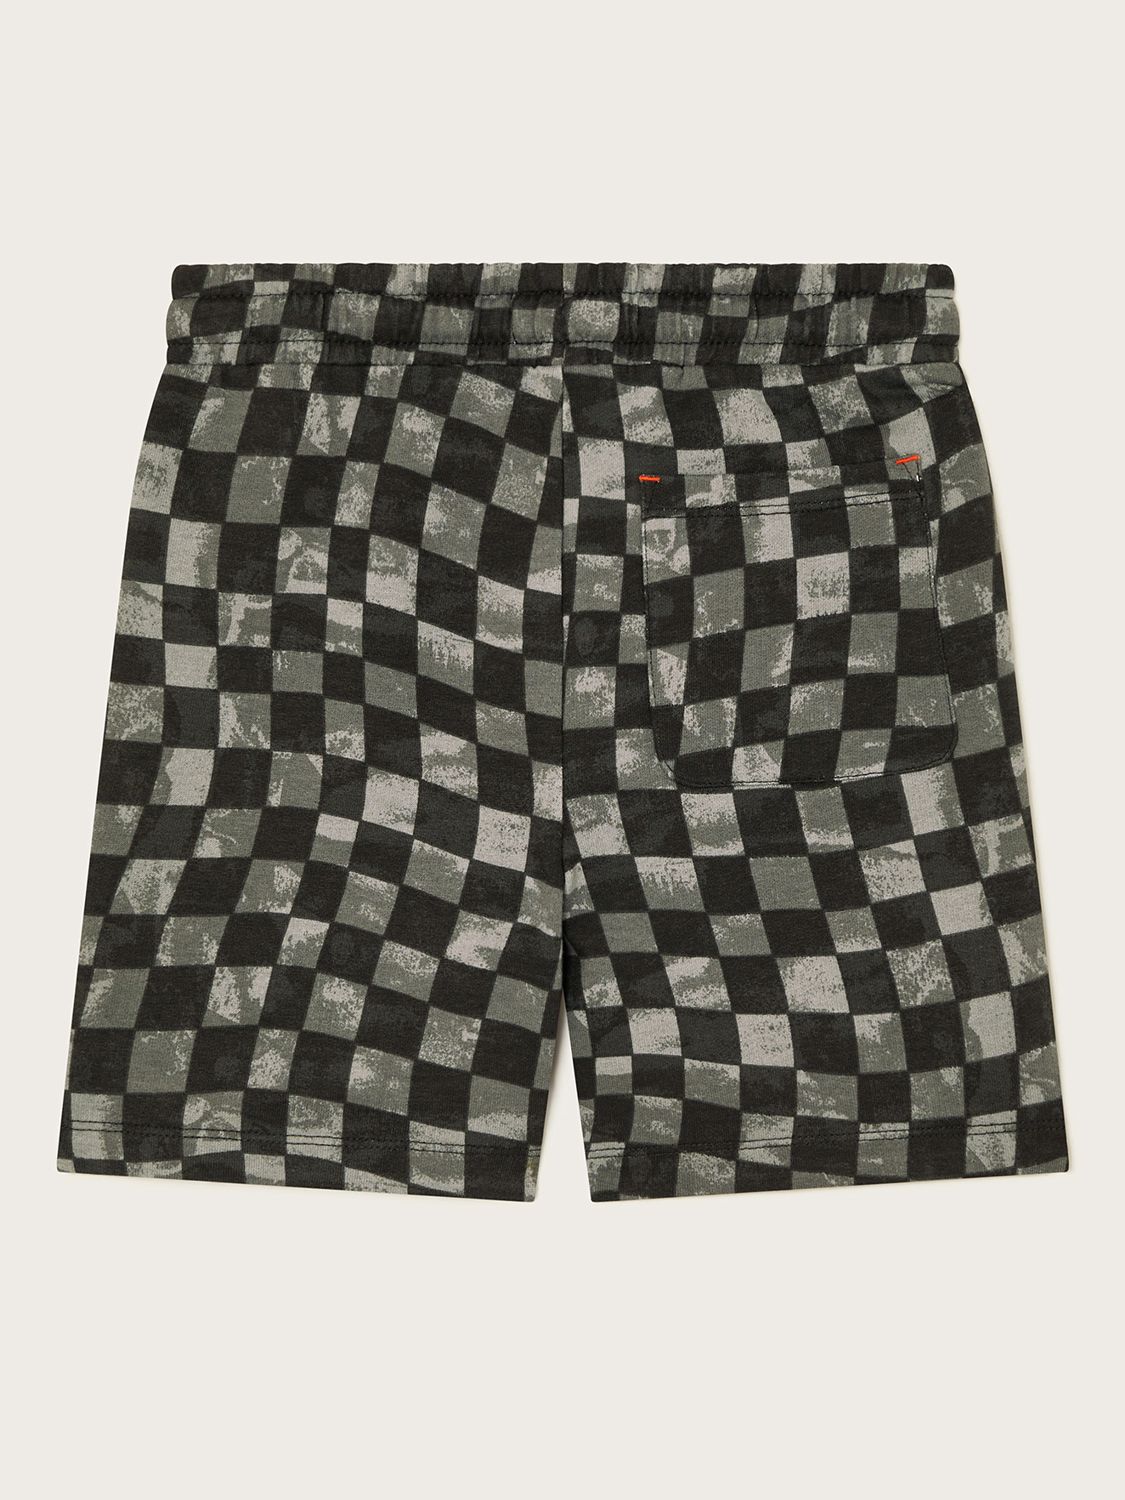 Monsoon Kids' Checkerboard Drawstring Shorts, Black/Multi, 3-4 years